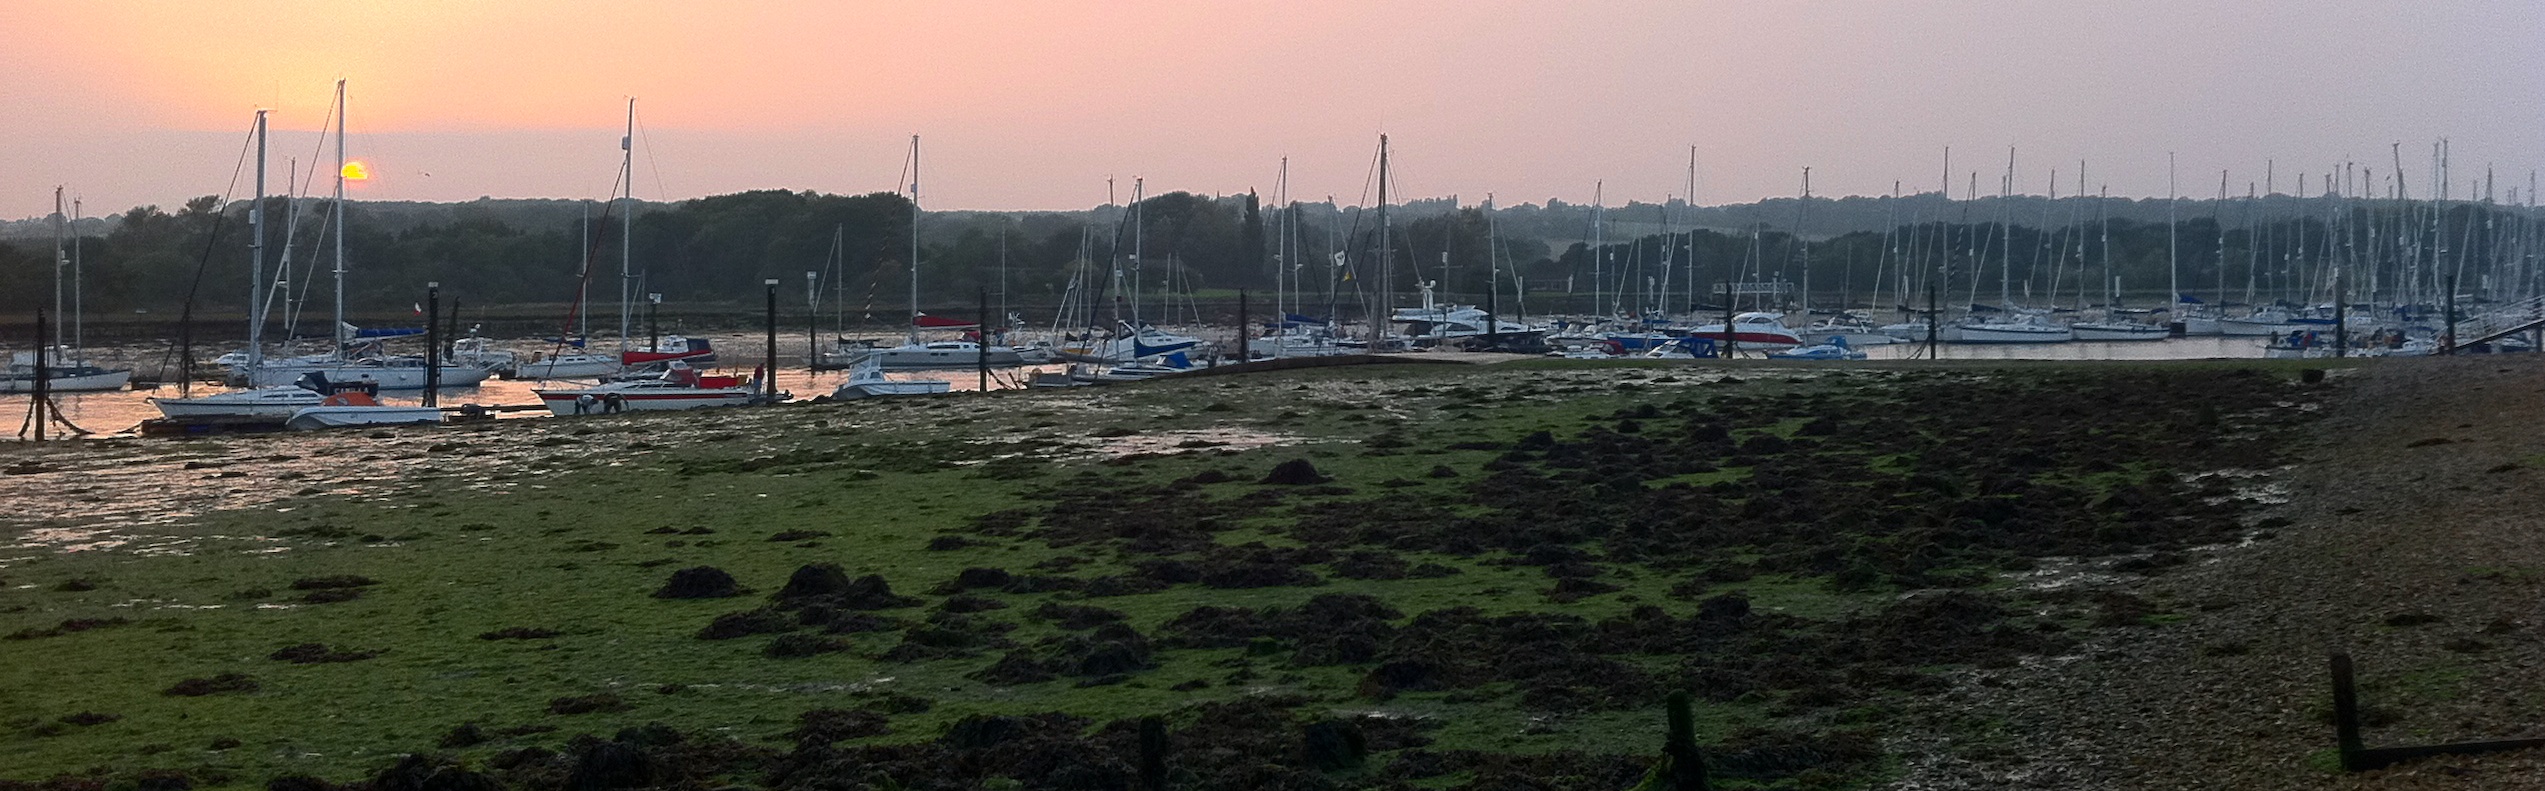 Sunset at the Folly Inn, River Medina, Isle of Wight